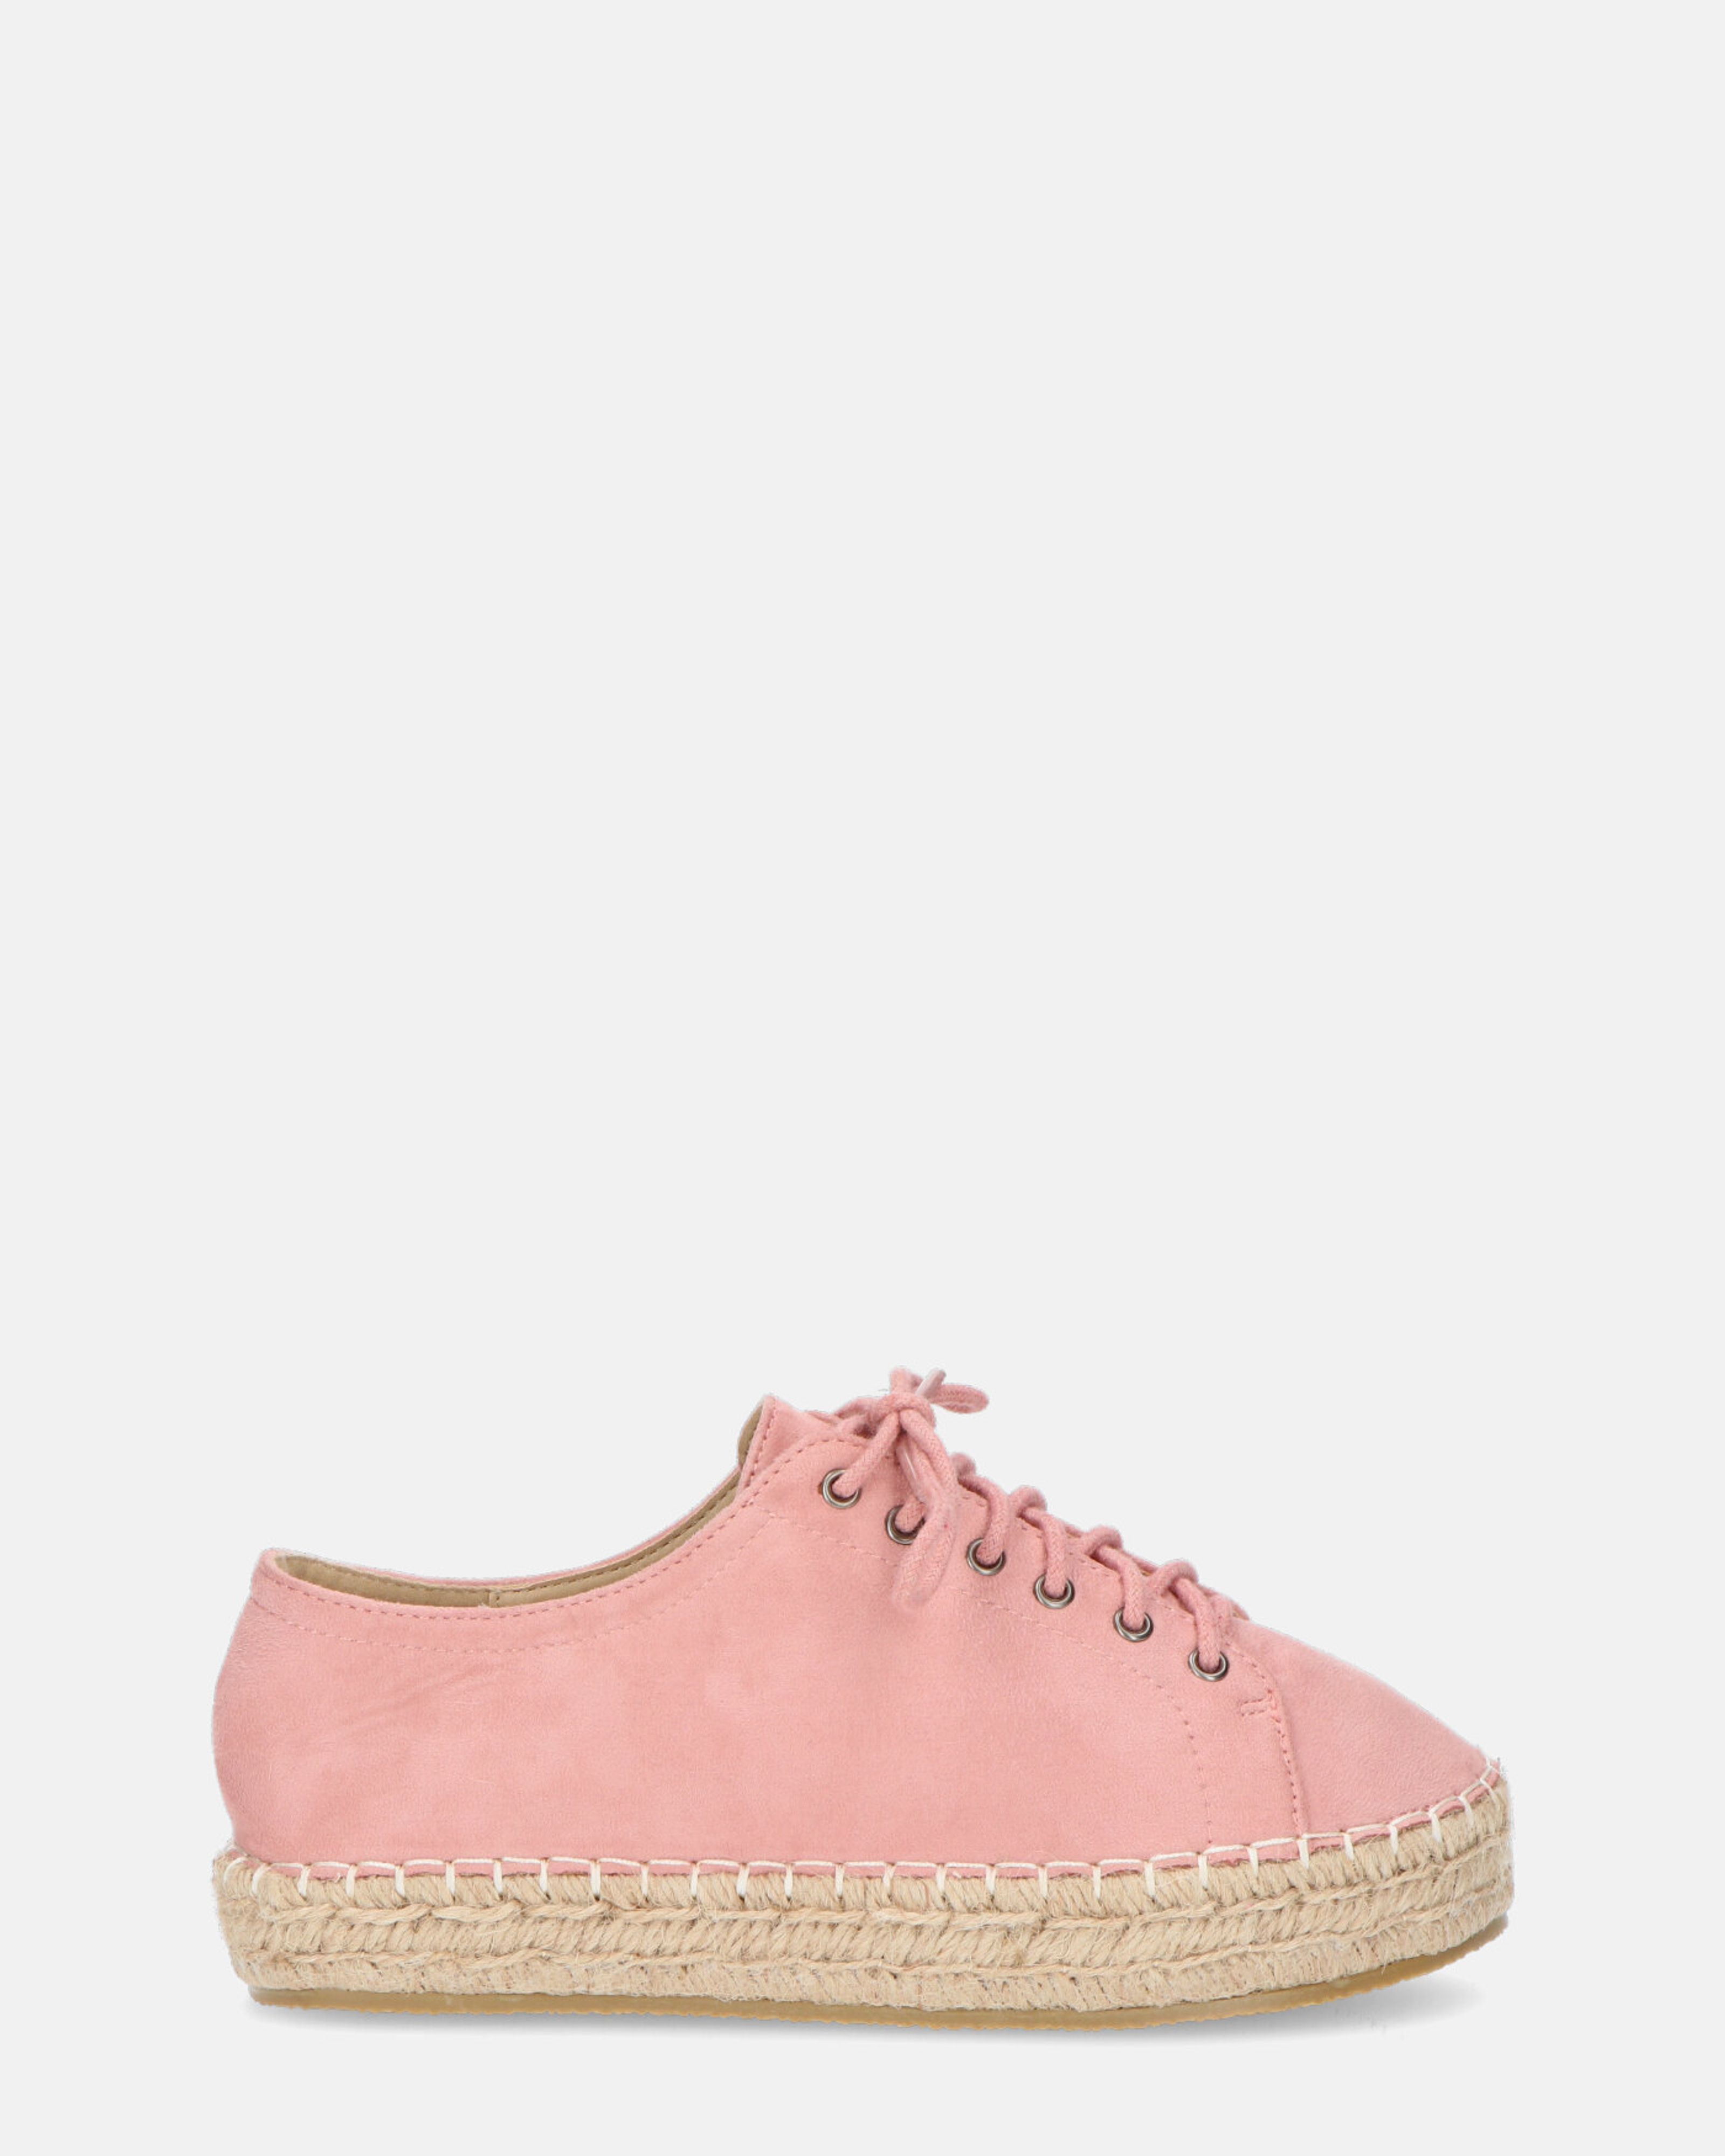 SABELLA - scarpe con suola tipo espadrillas rosa